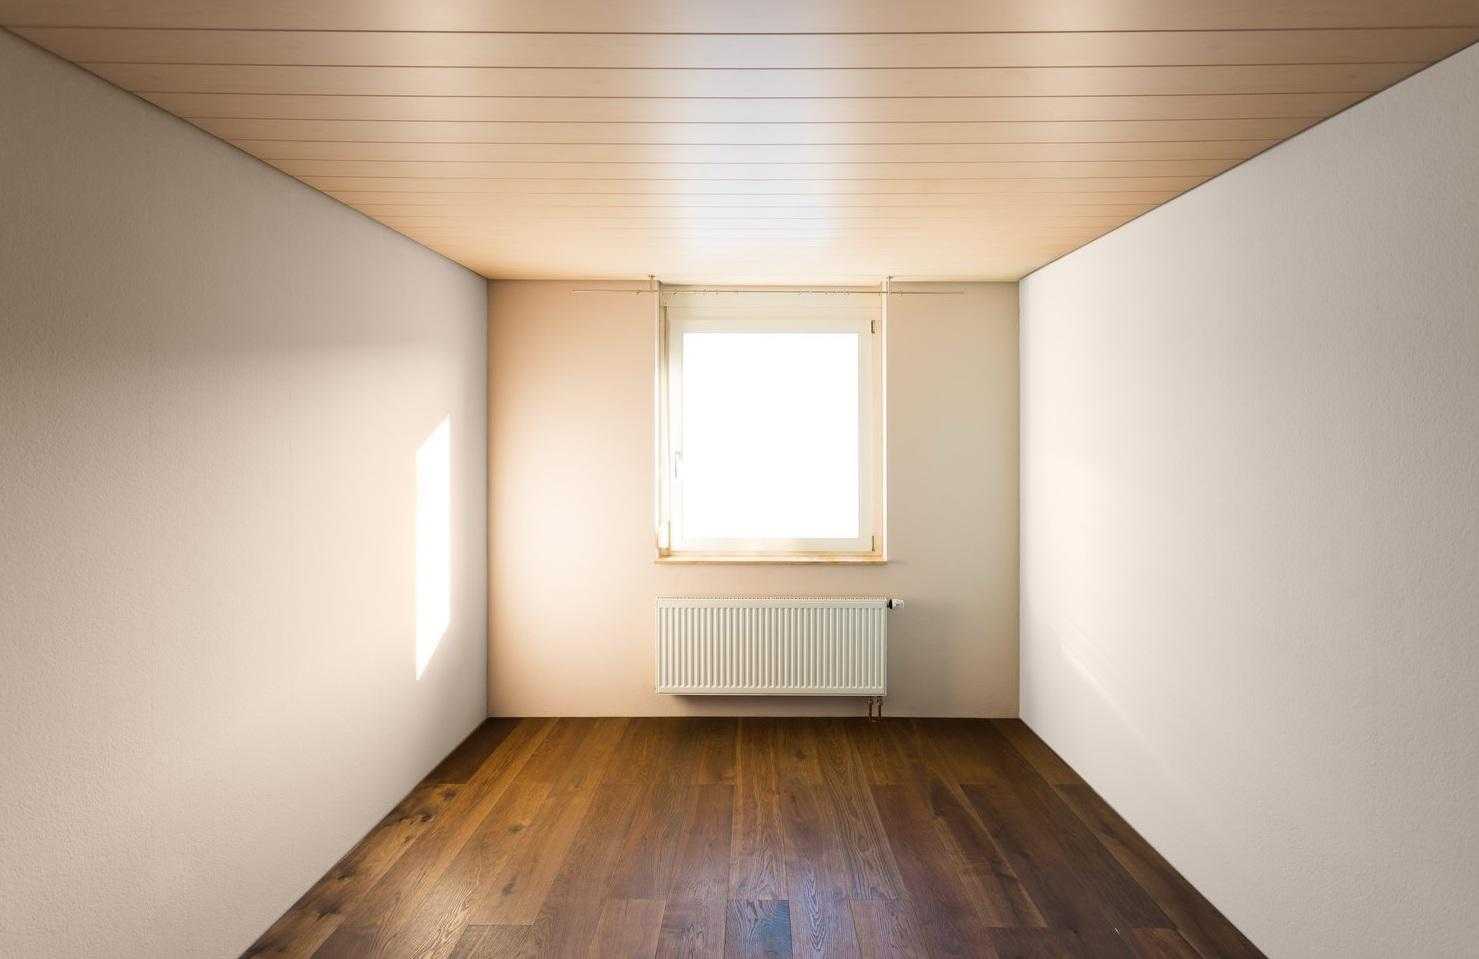 сонник пустая комната без мебели